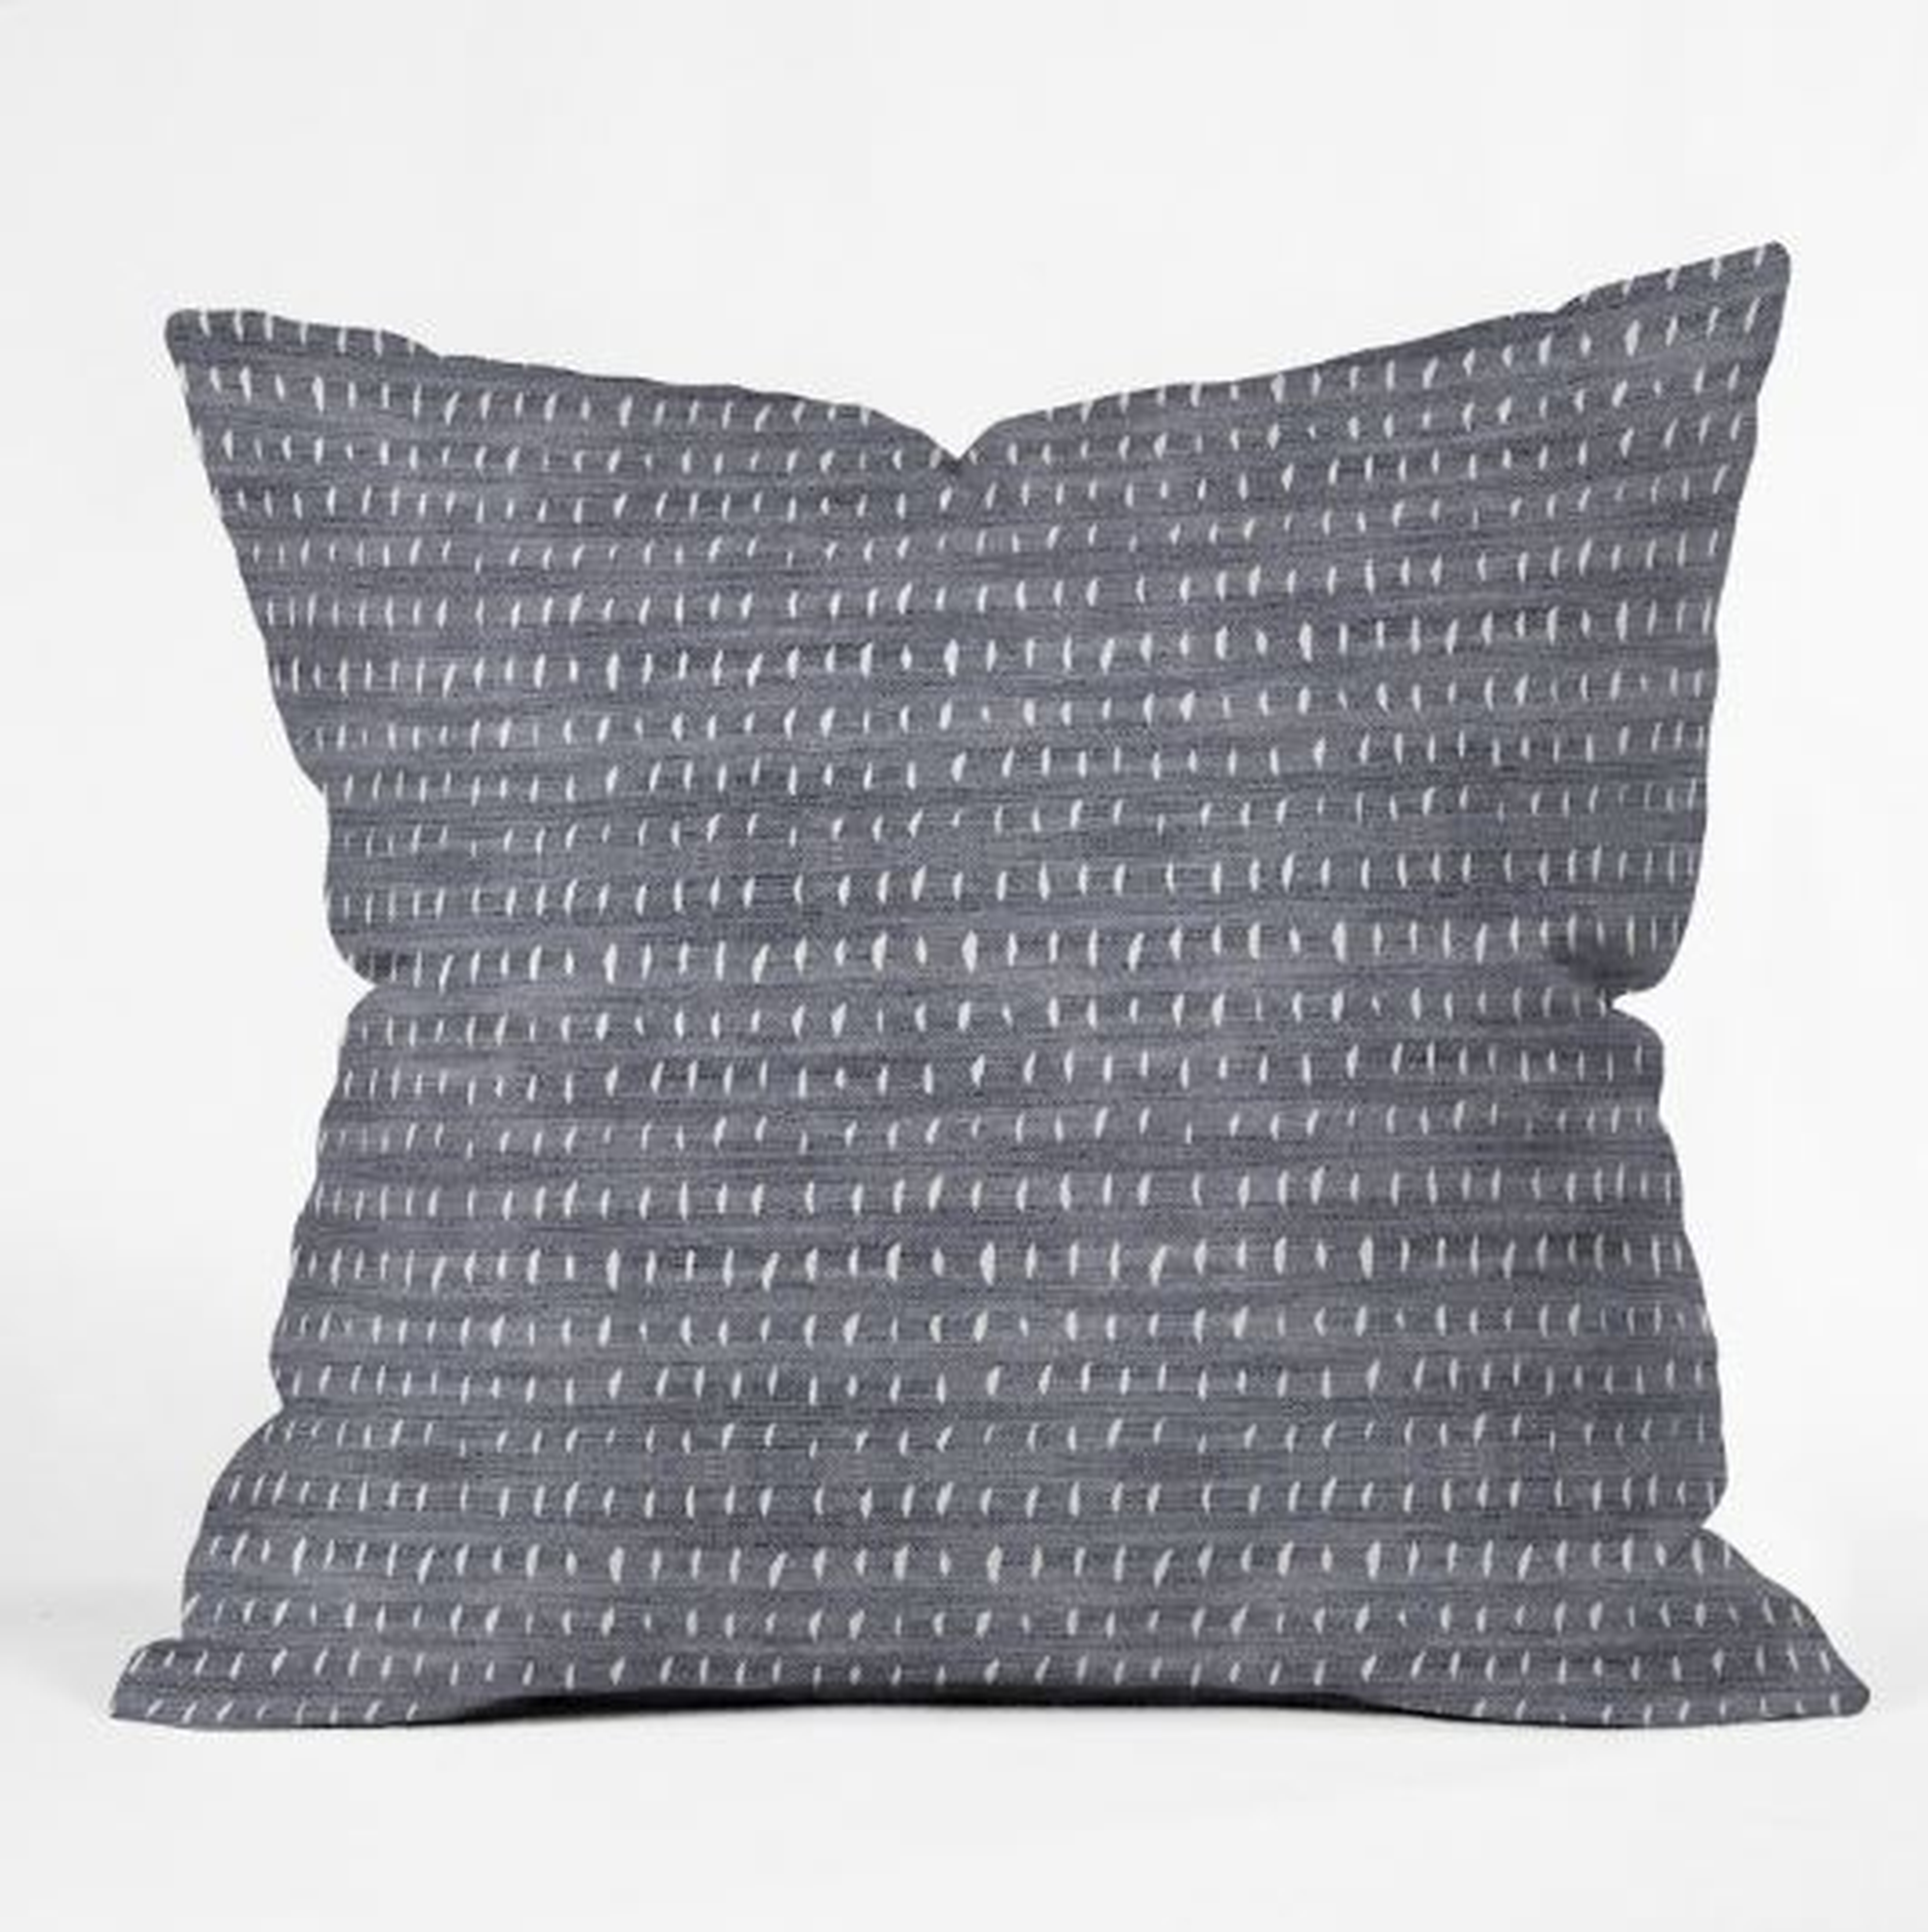 BOGO DENIM RAIN LIGHT Throw Pillow - 18" x 18" - Pillow Cover with Insert - Wander Print Co.